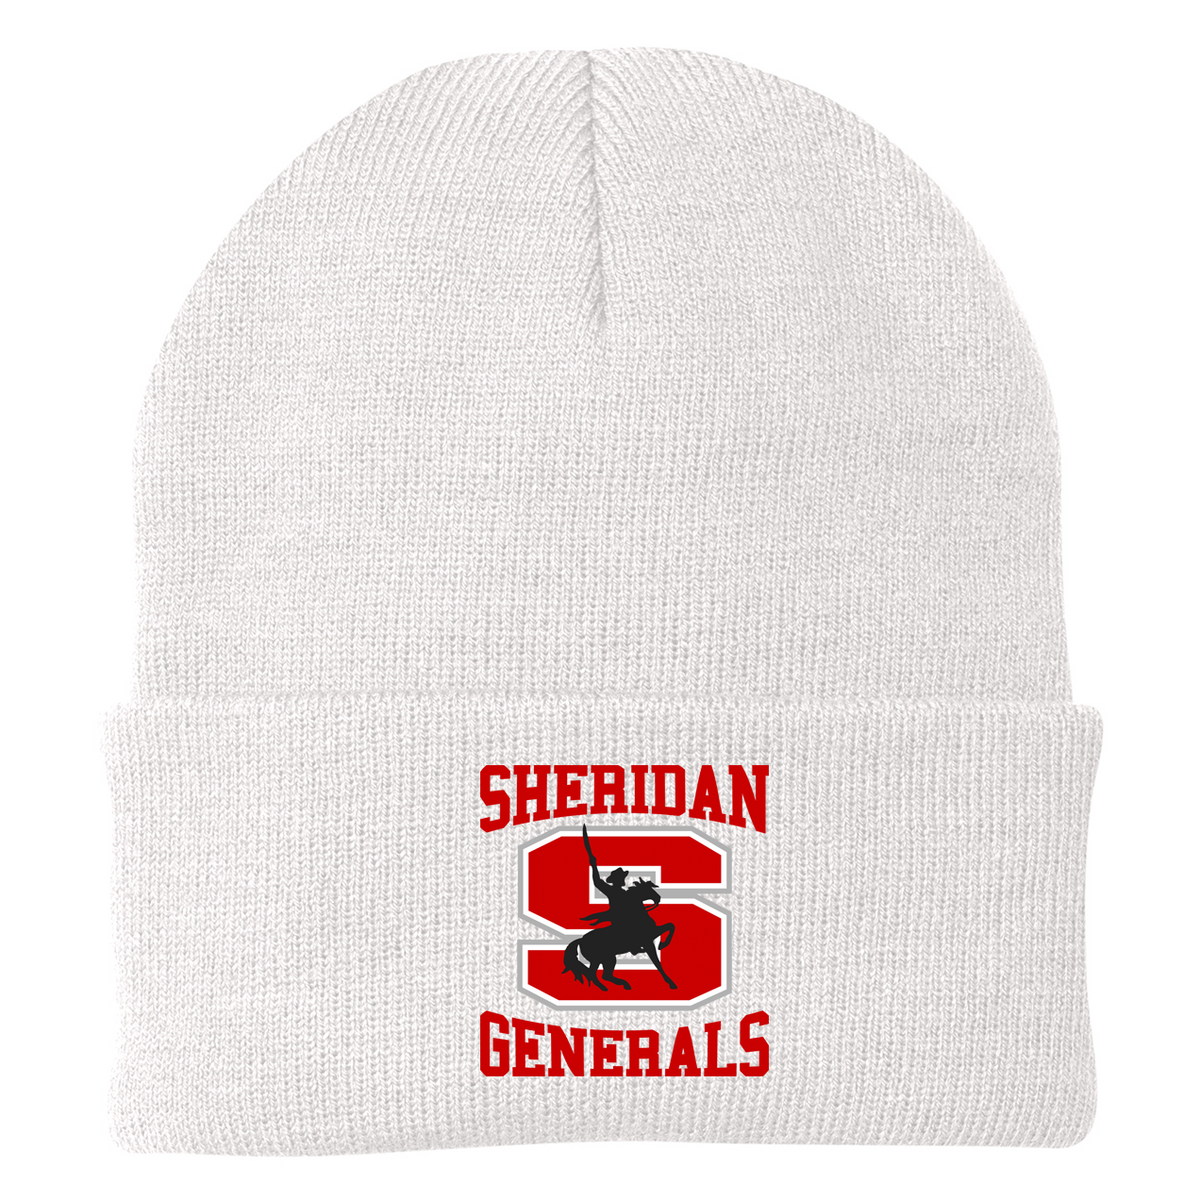 Sheridan Generals Knit Beanie